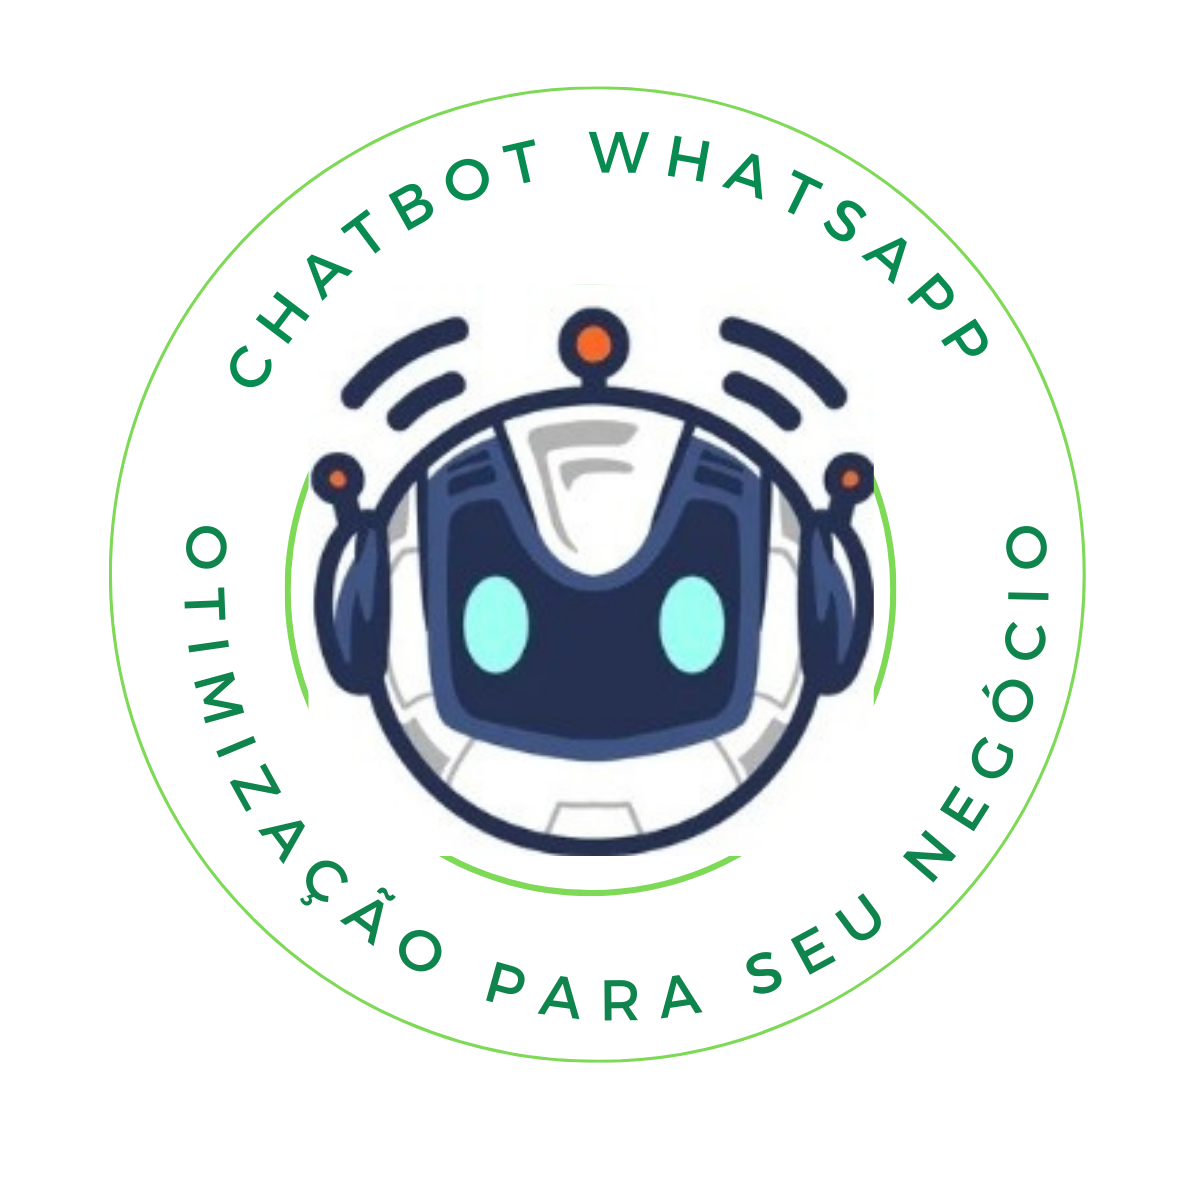 Chatbot para whatsapp business